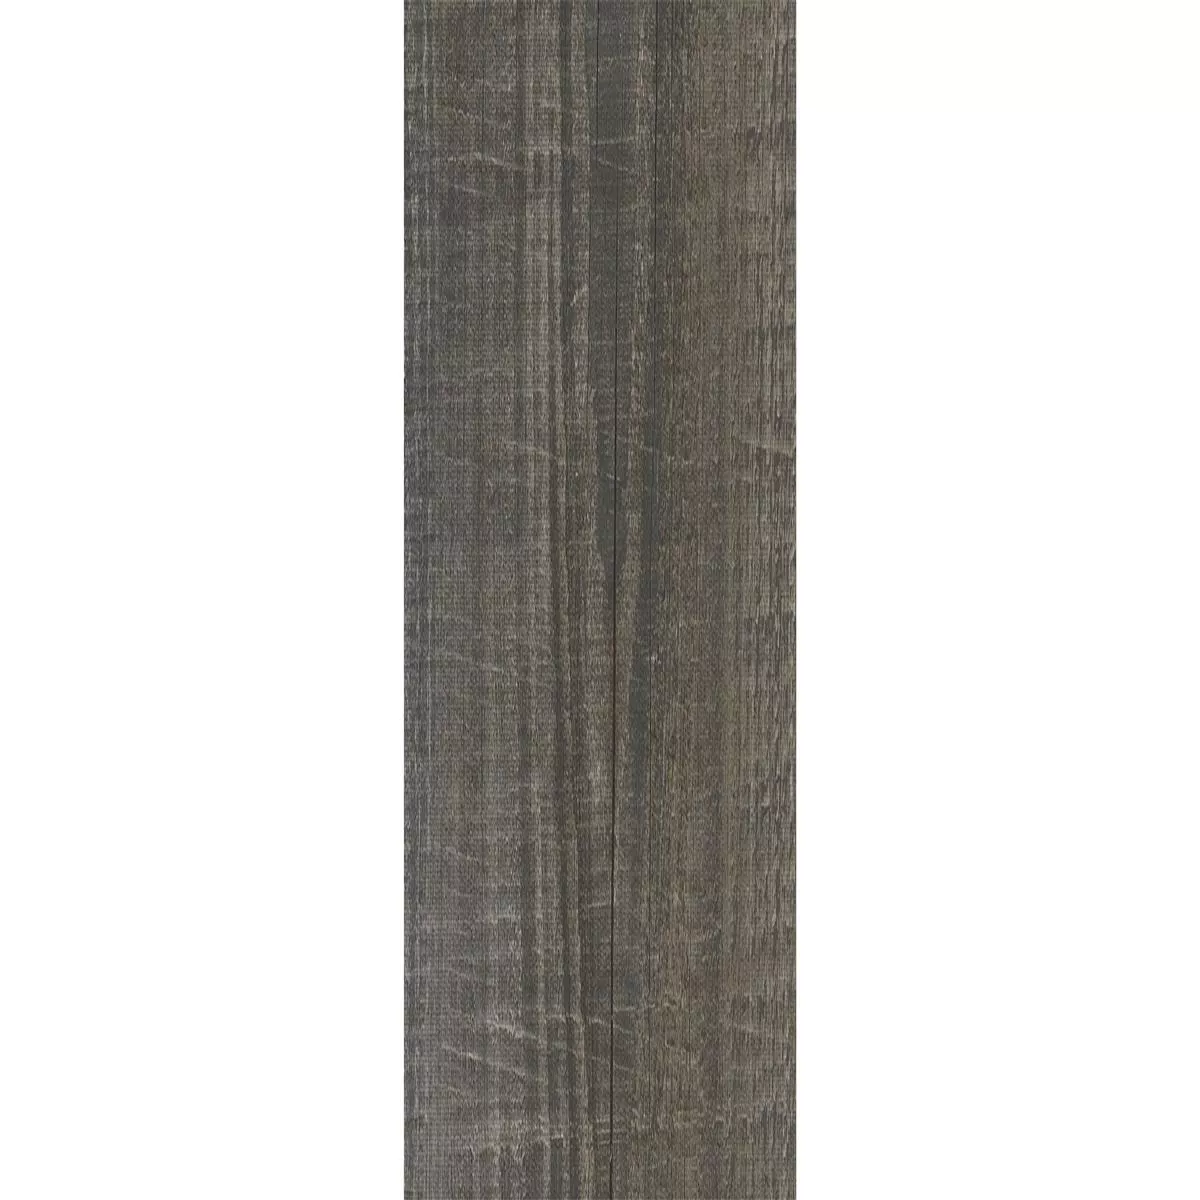 Vinyl vloertegels Klik Systeem Diors Grijs Taupe 17,2x121cm